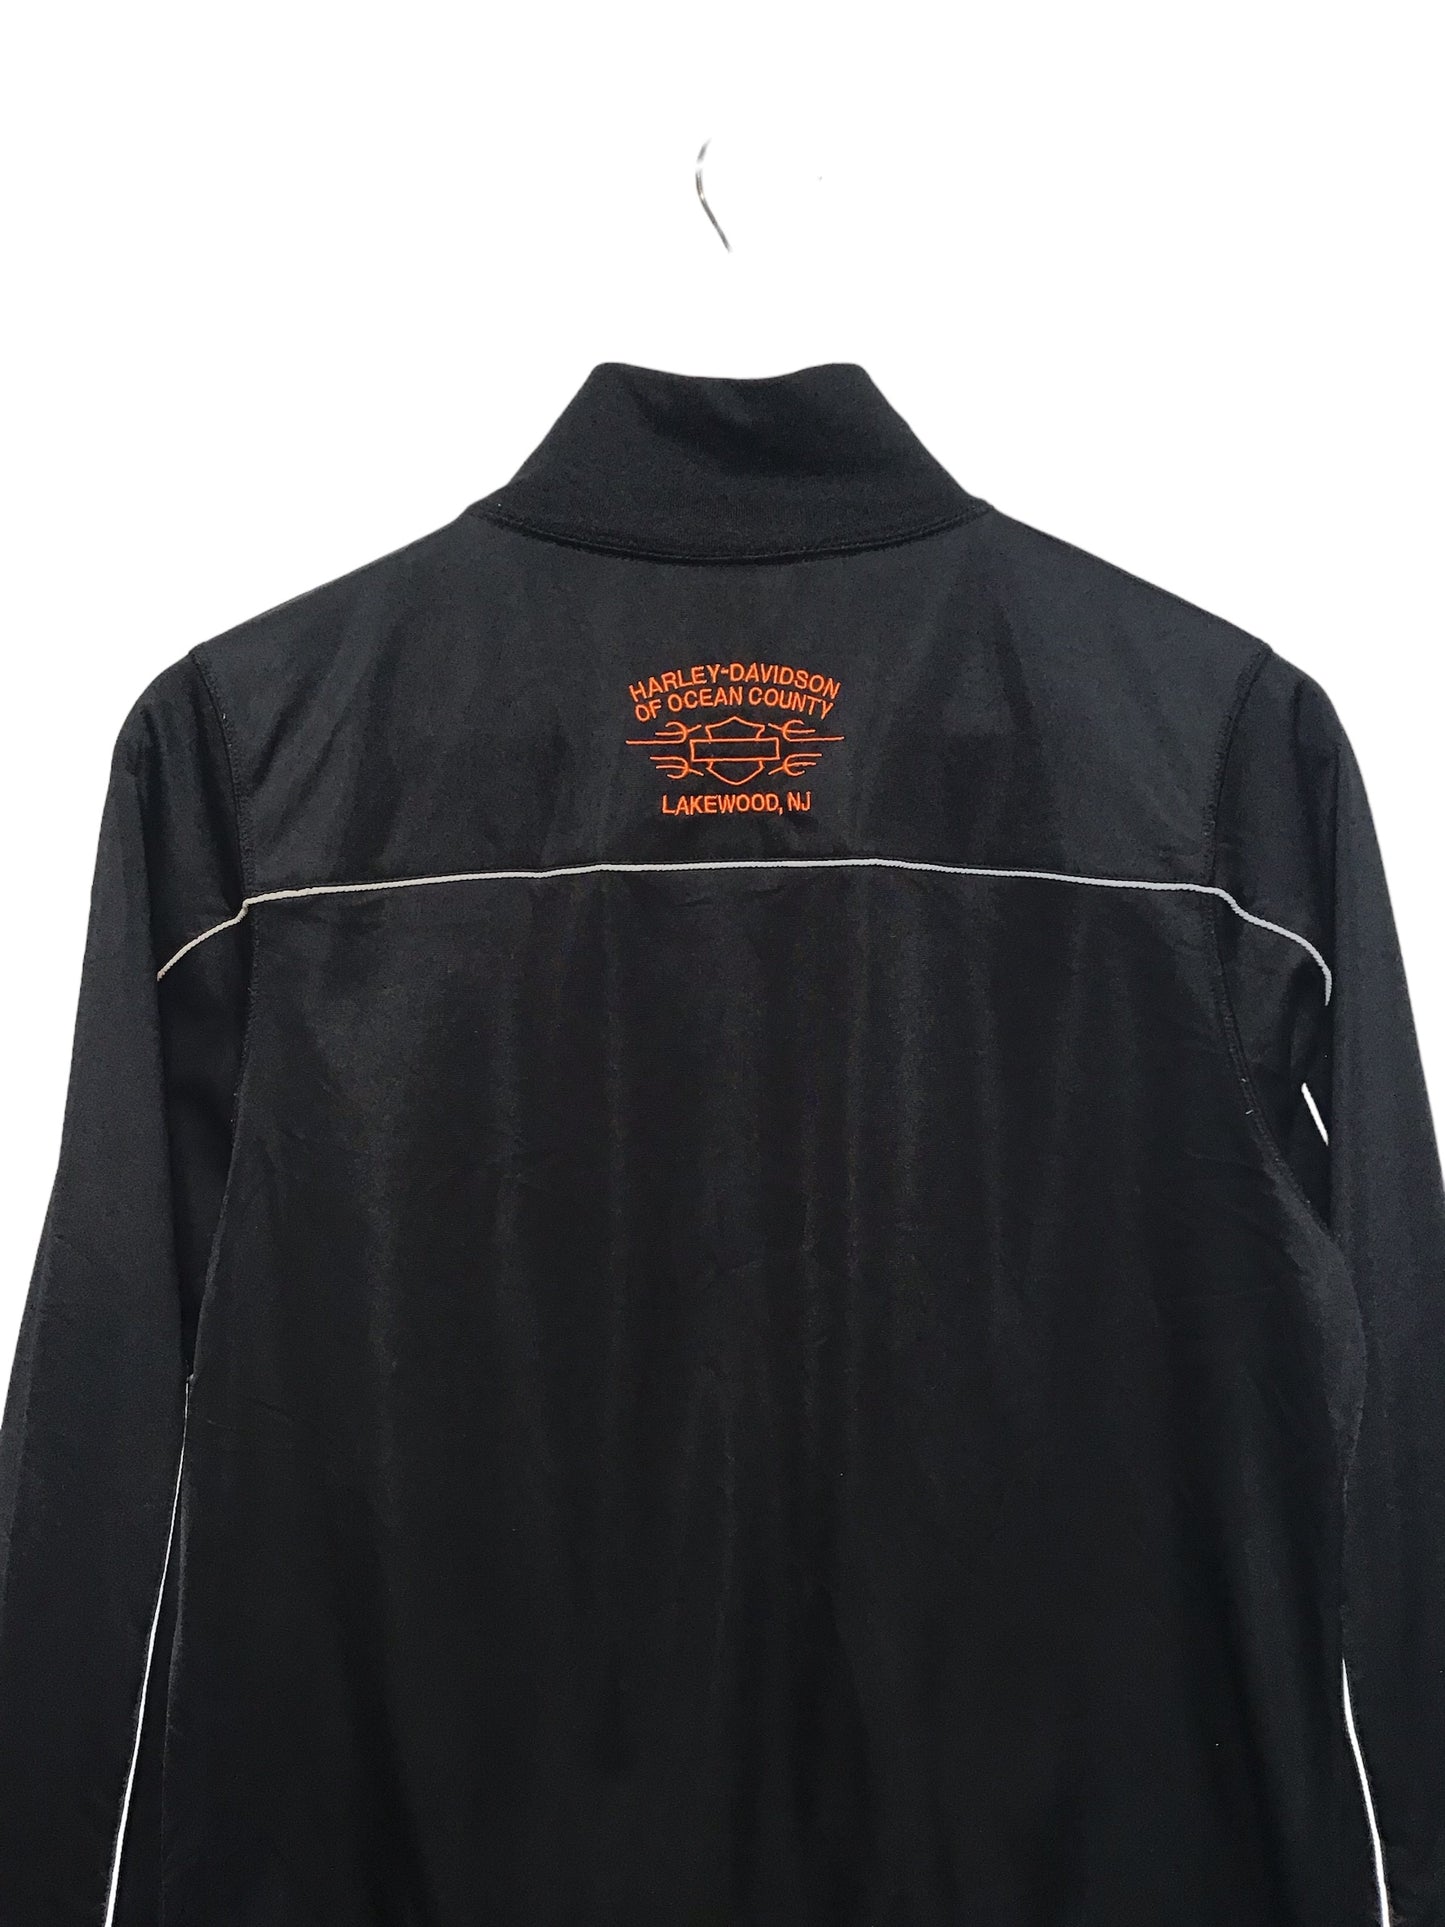 Harley Davidson Zip Up Jacket (Size S)